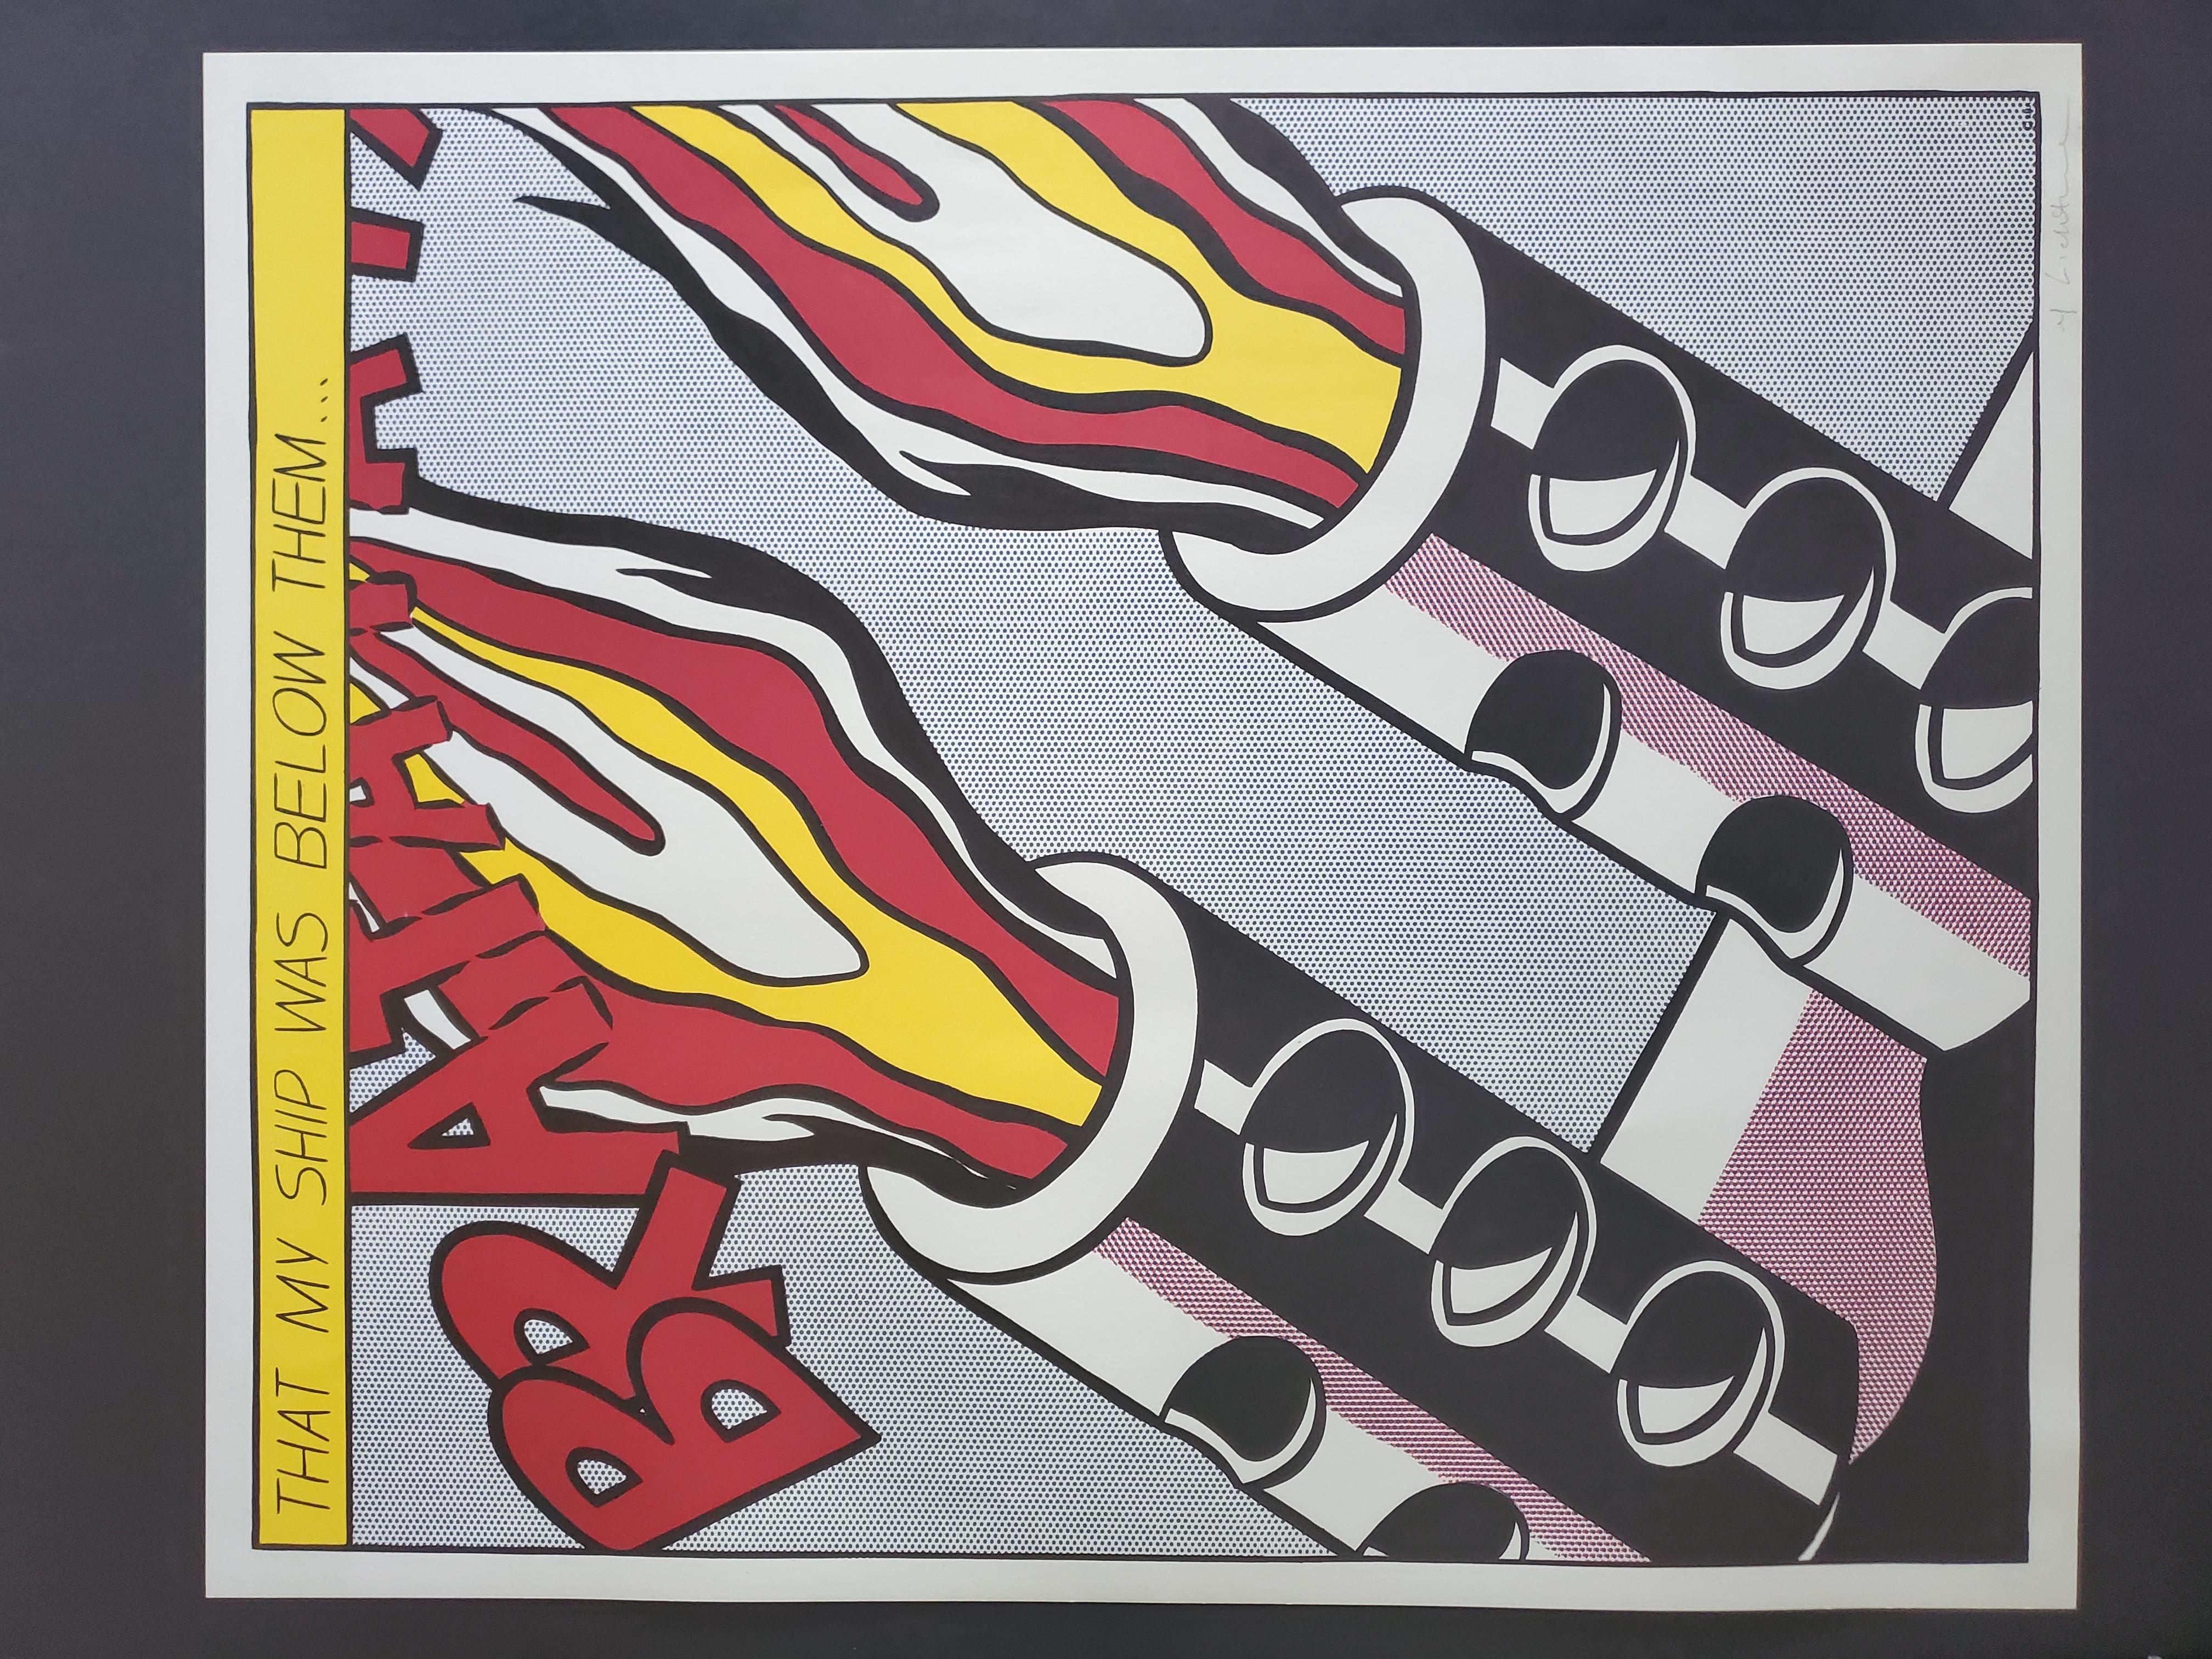 ROY LICHTENSTEIN 'AS I OPENED FIRE' TRIPTYCH SET OF 3, SIGNED (RIGHT PANEL) 1966 - Print by Roy Lichtenstein